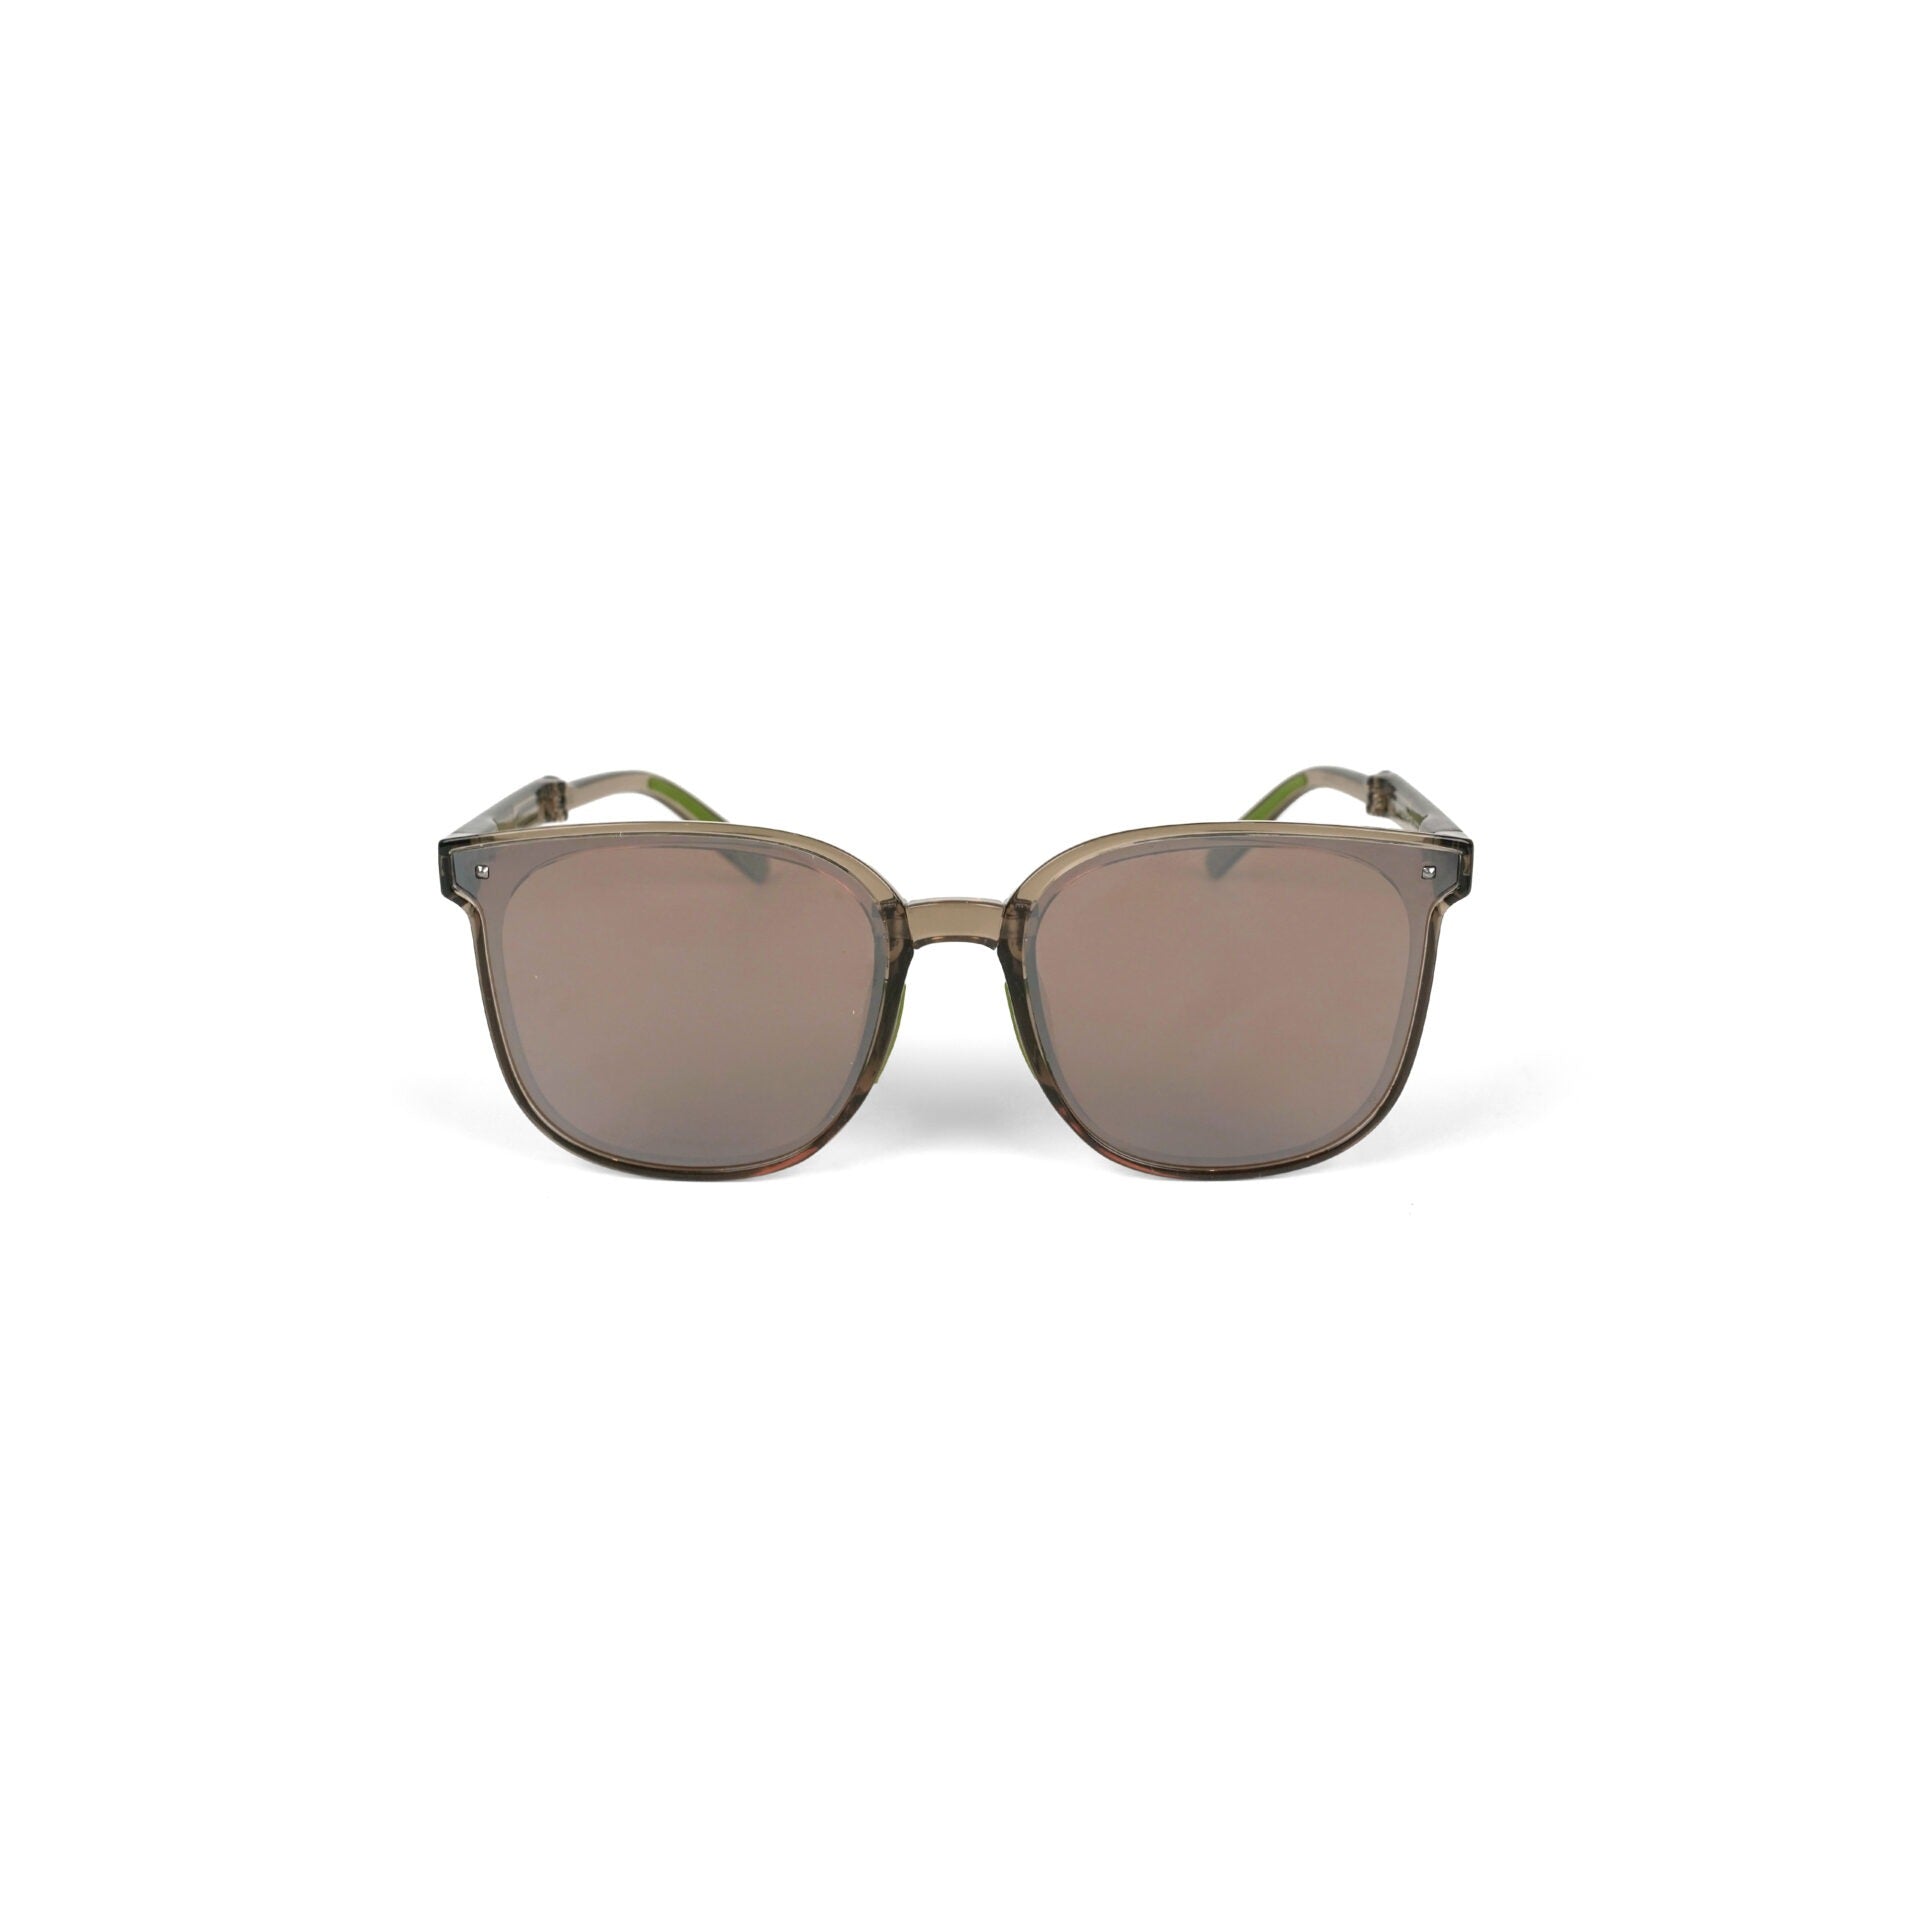 Zea Sunglasses Collection DARK BROWN